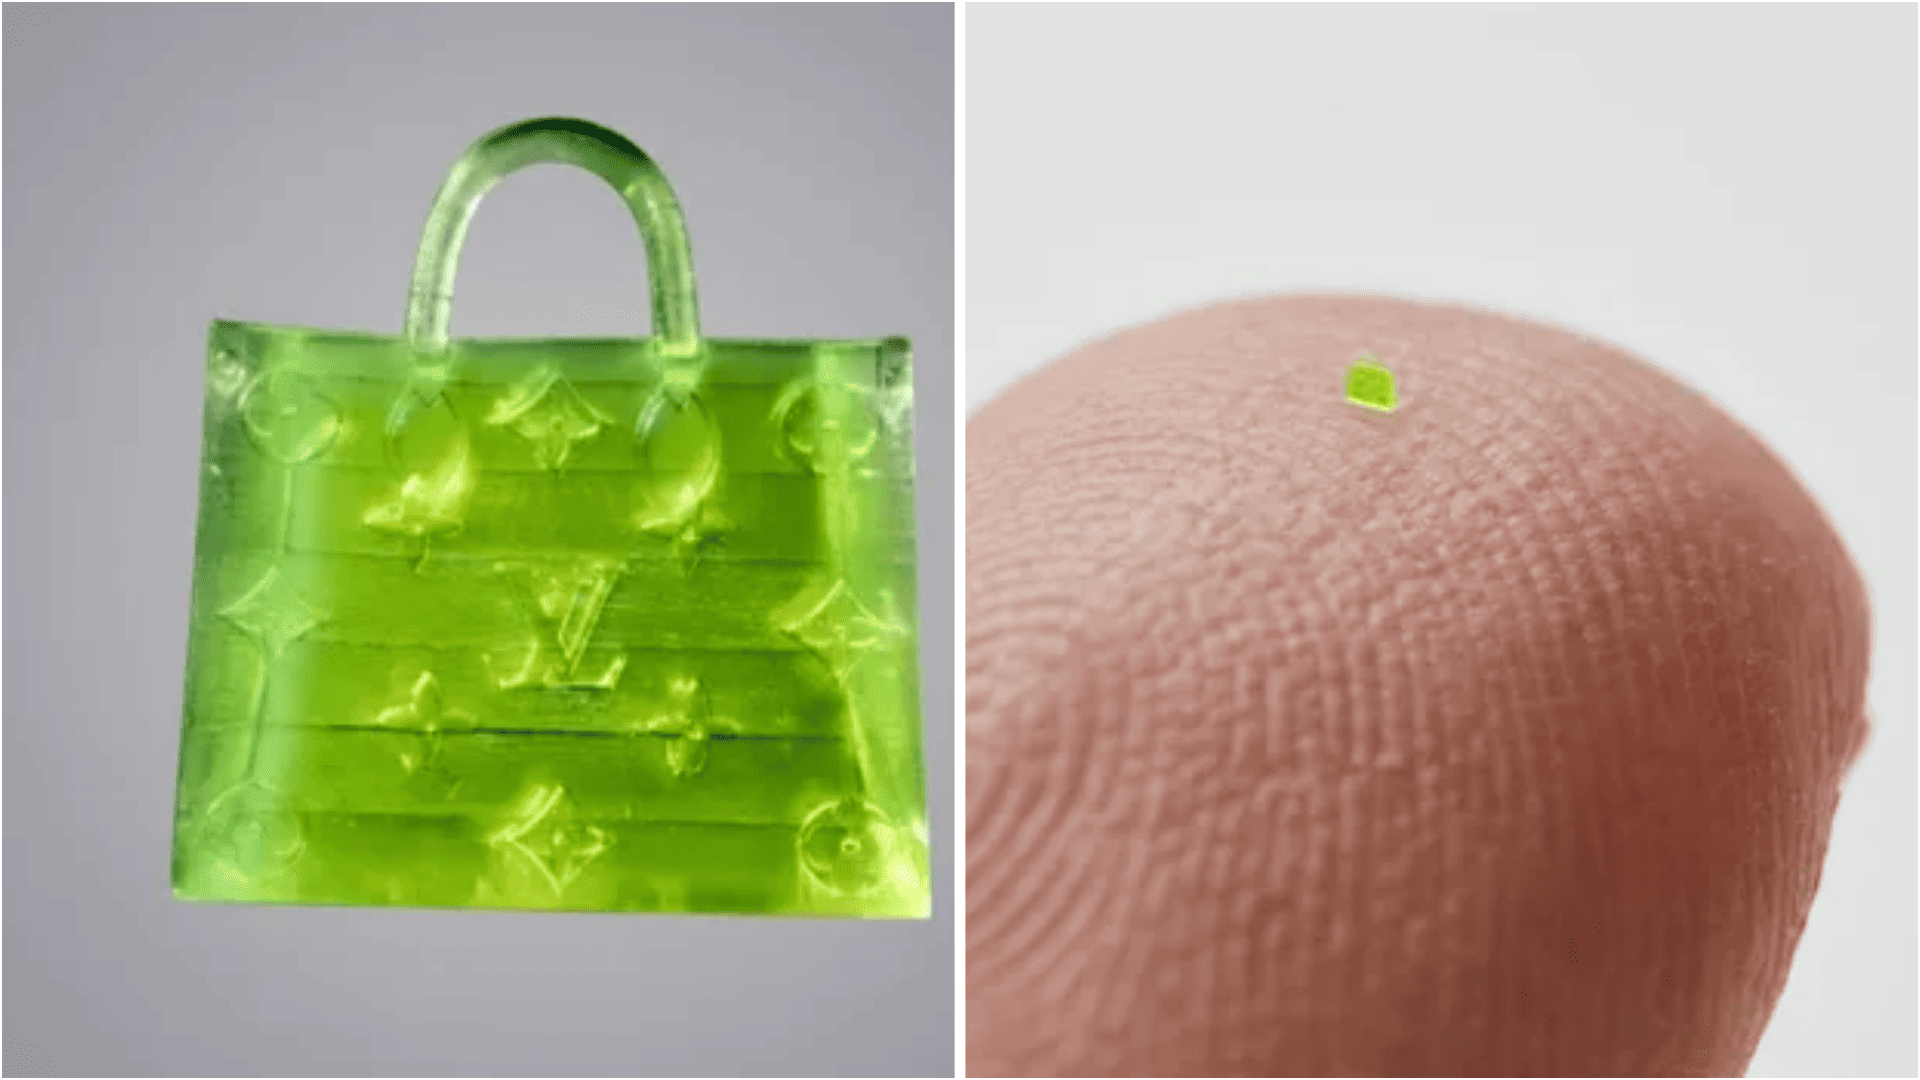 Handbag ‘smaller than a grain a salt’ sells for $63k